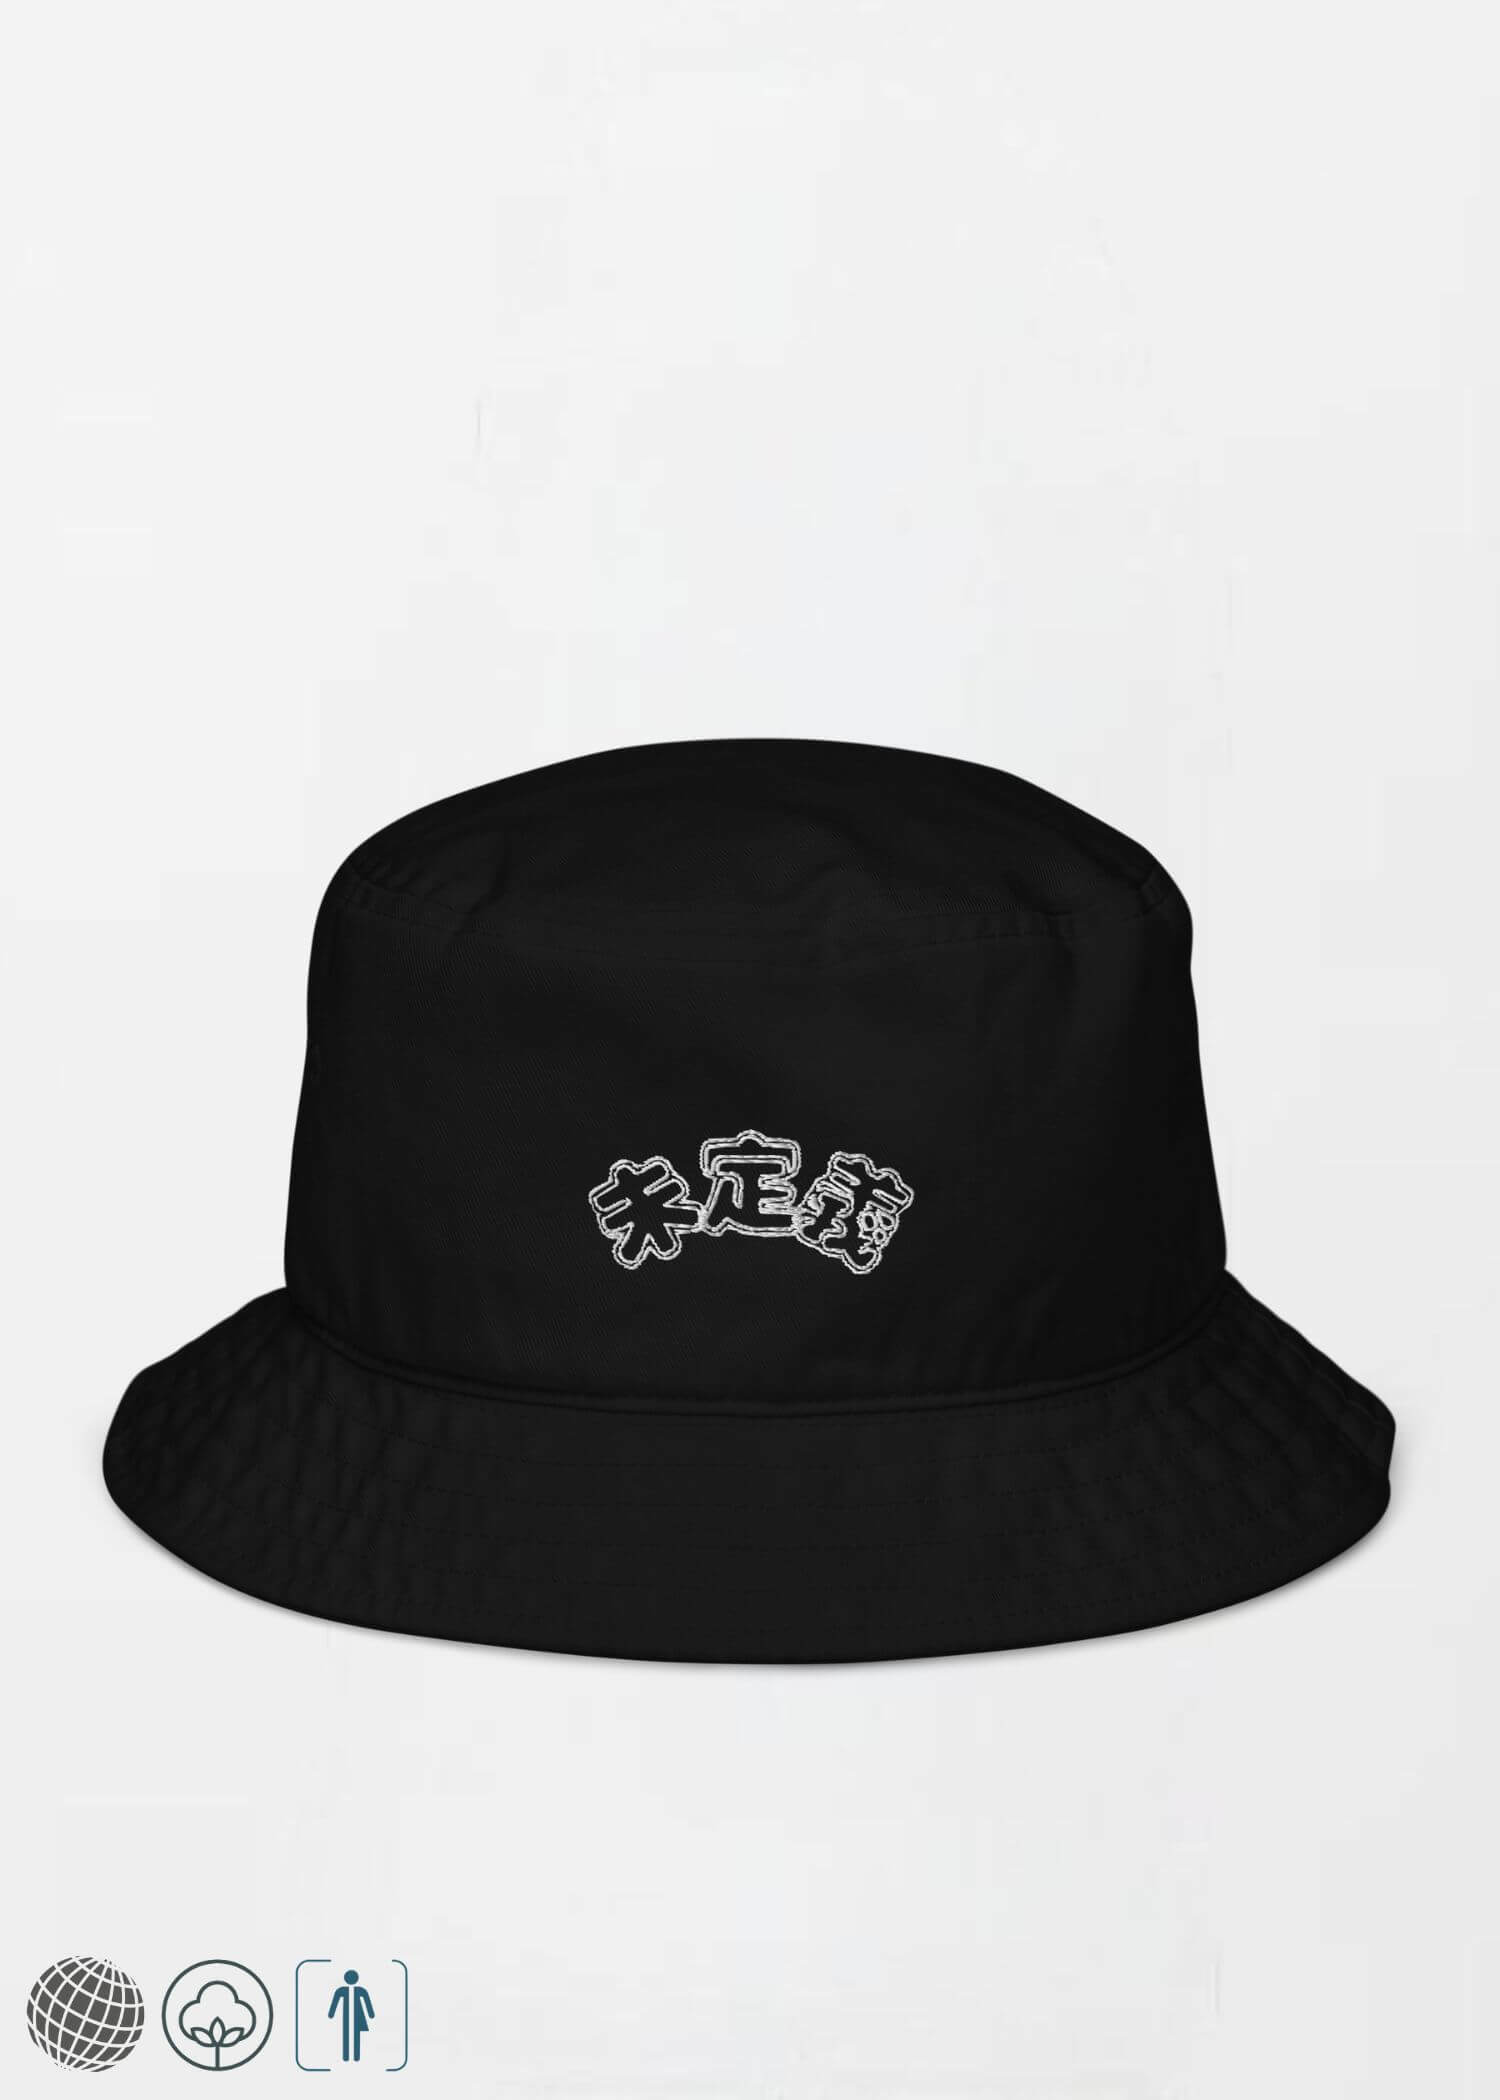 Organic Cotton Bucket Hat miteigi Logo  Women’s Men’s miteigi Logo Branded product item Unisex anywear summer festival hats for woman man in black Mens womens Headwear in black